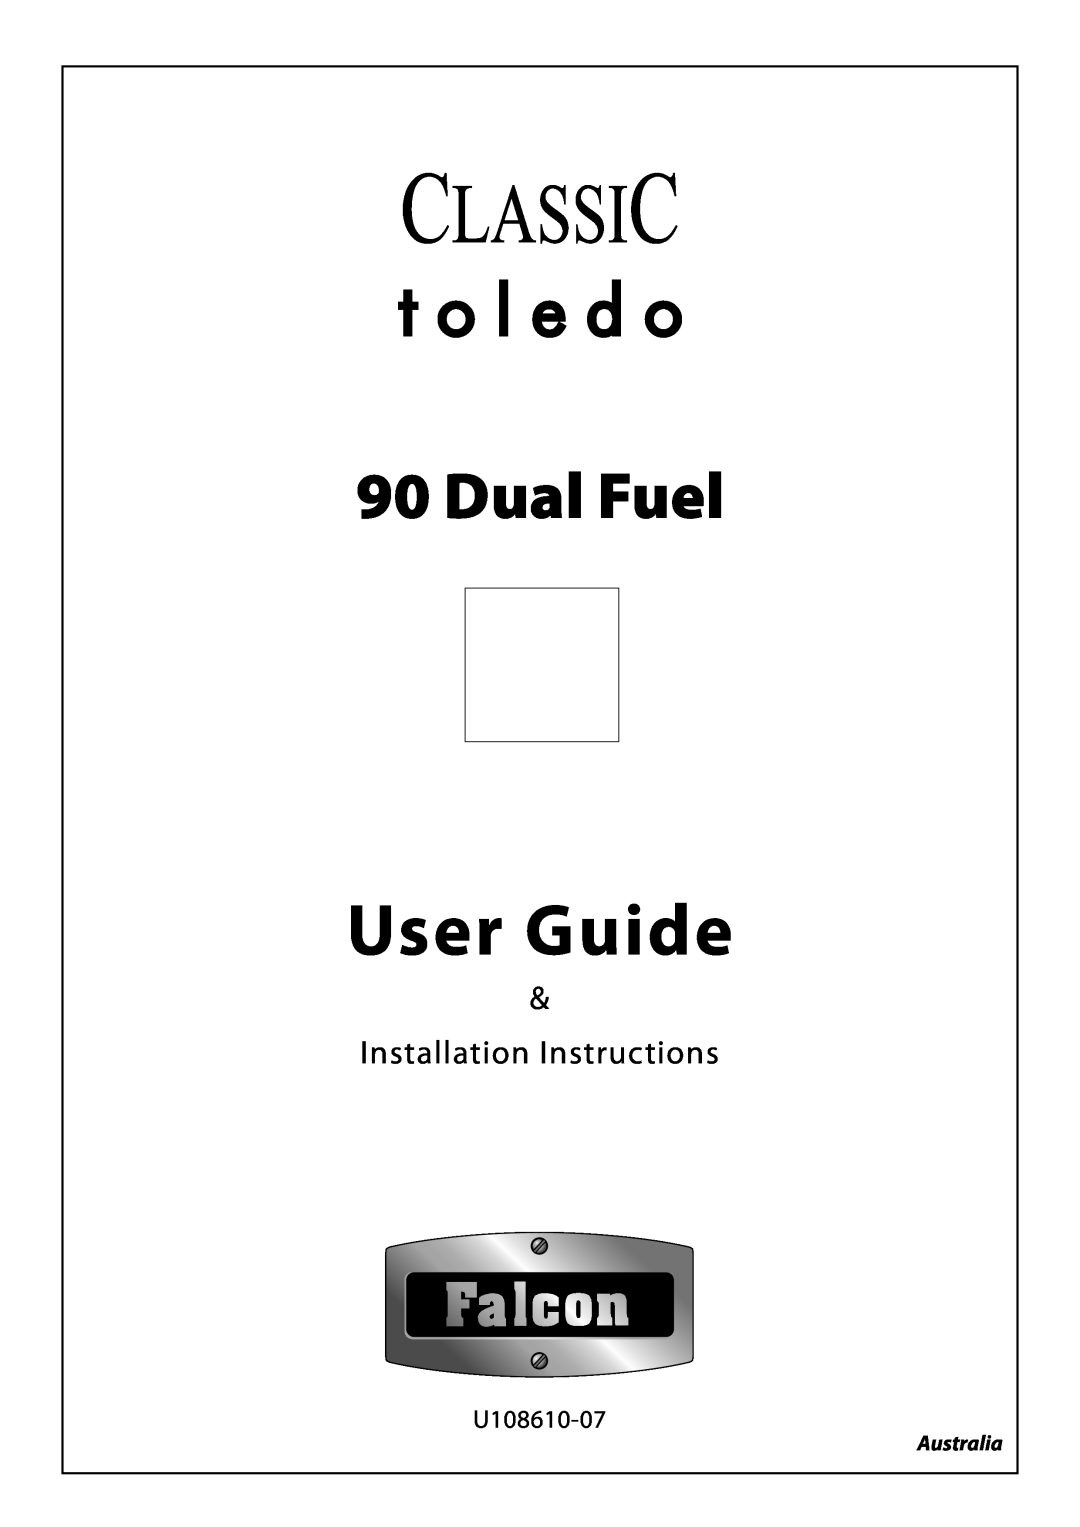 Falcon U108610-07 installation instructions User Guide, Dual Fuel, Installation Instructions, Australia 